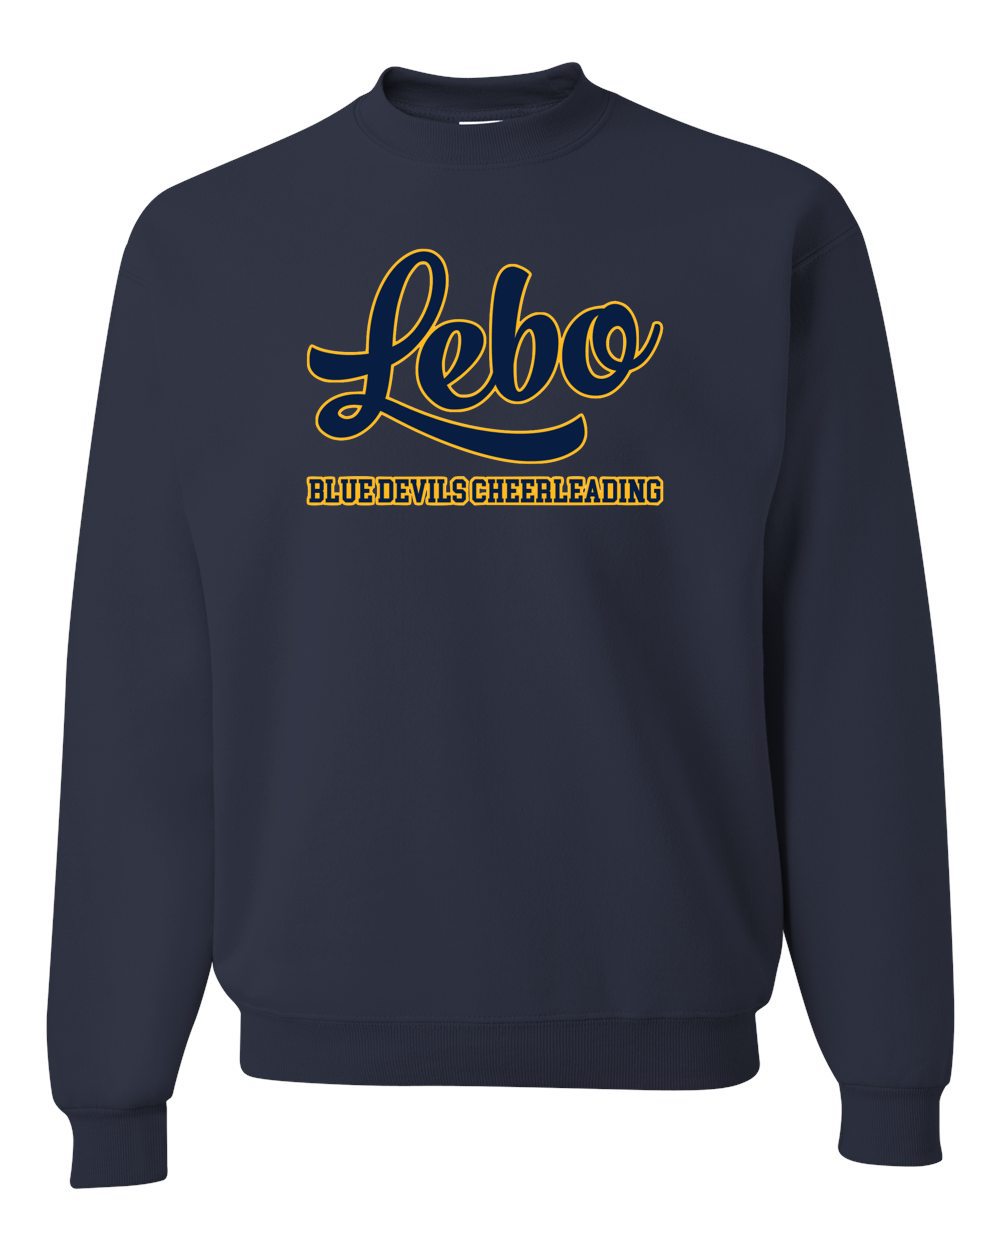 Navy LEBO CHEER Crew Sweatshirt